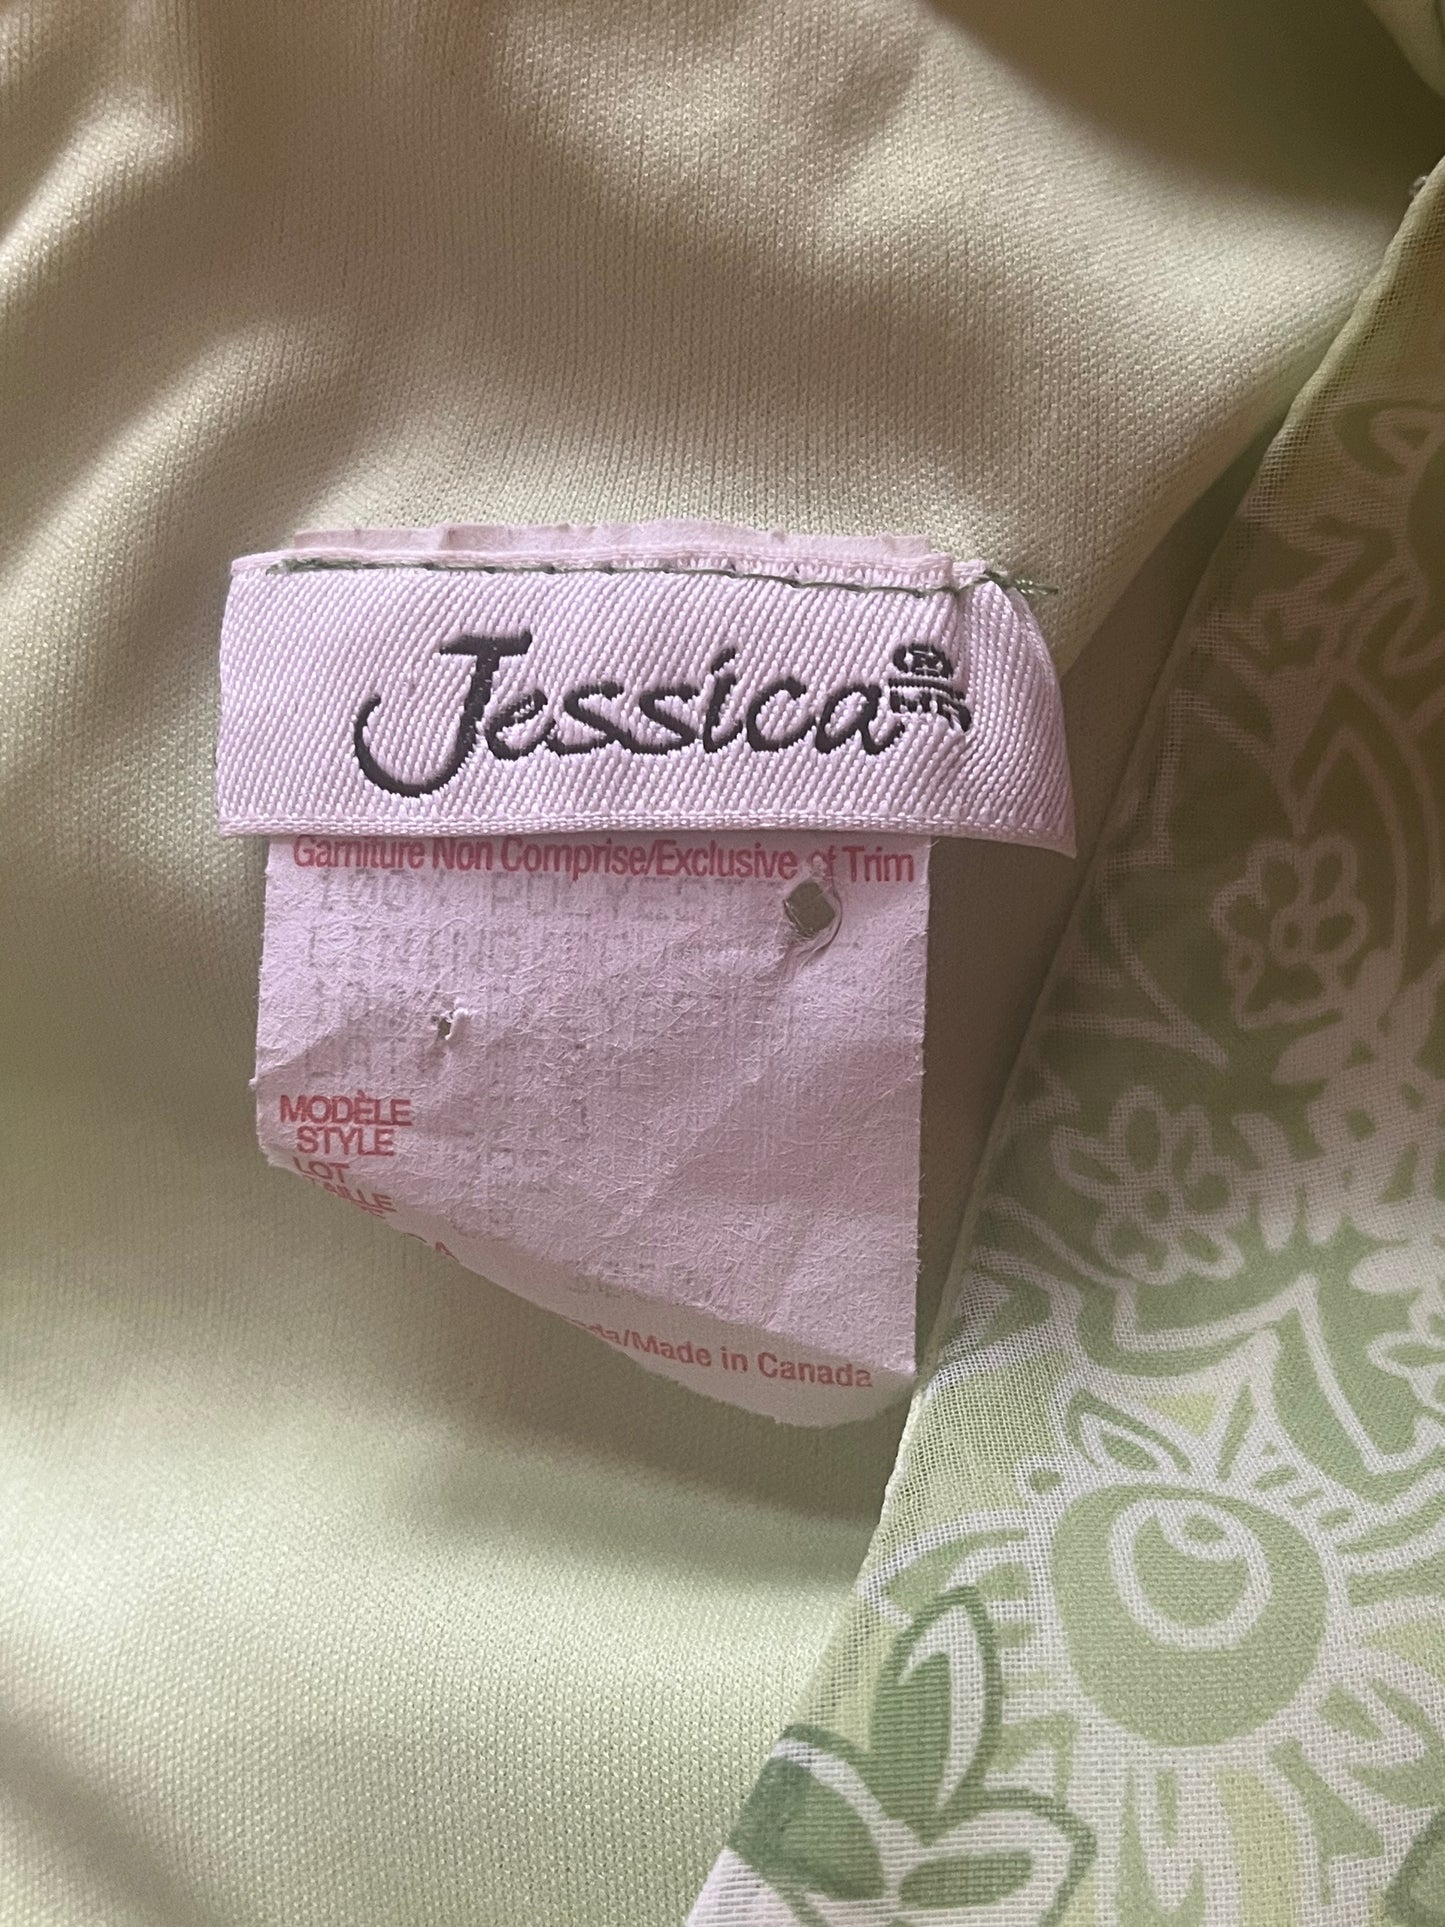 90s 'Jessica' Lime Green Mesh Maxi Dress / Medium